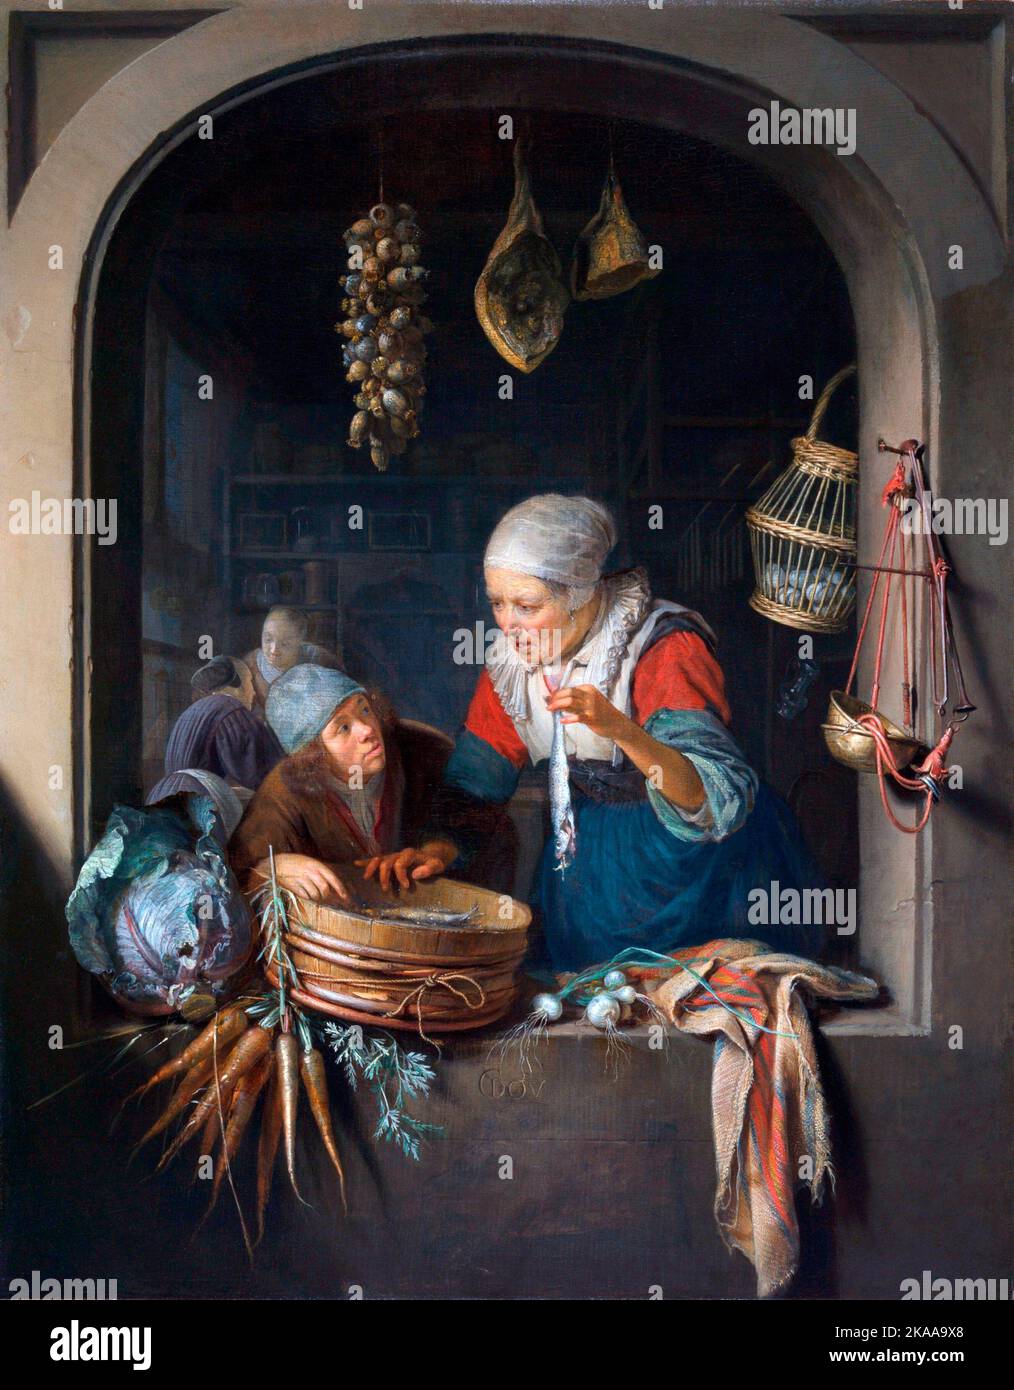 Herring Seller and Boy, Haringverkoopster met jongen, 1664, Painting by Gerrit Dou Stock Photo